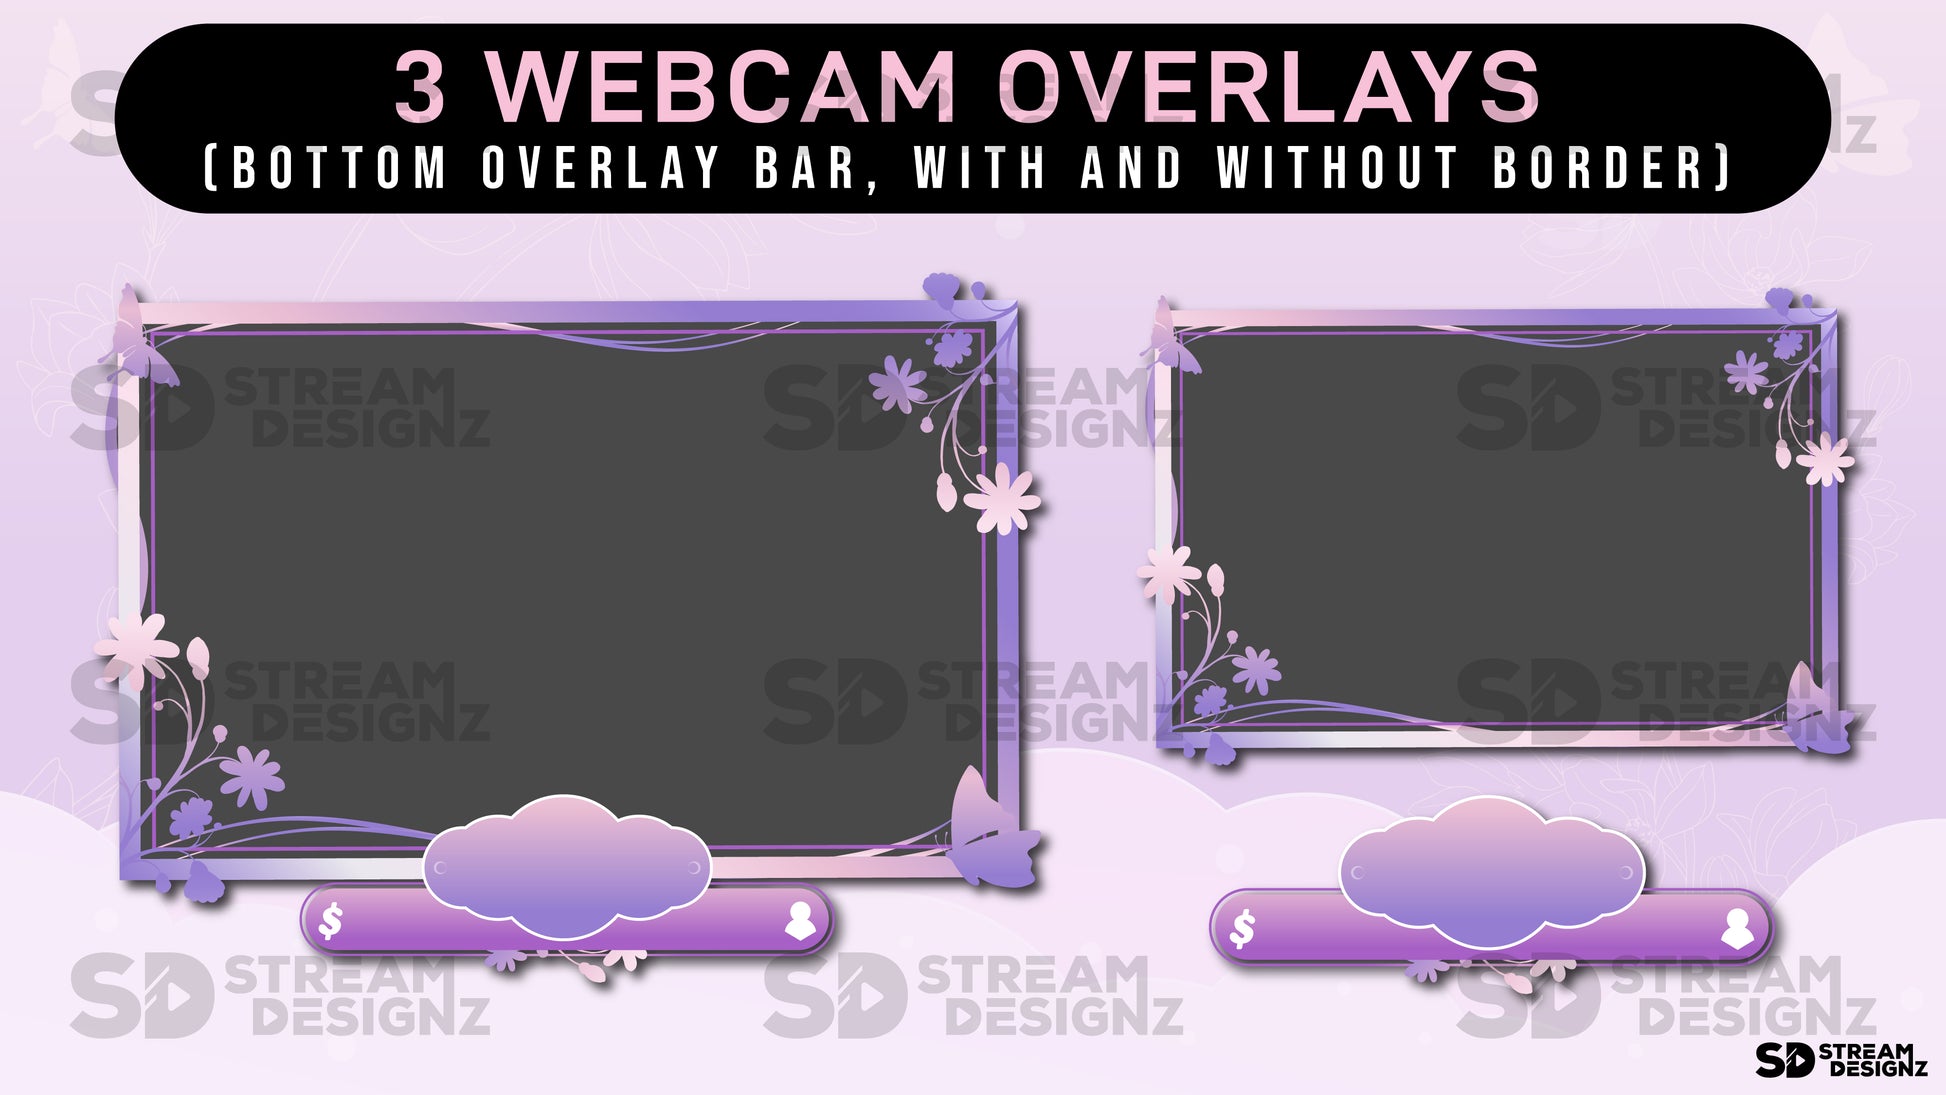 animated stream overlay package - webcam overlays - monarch - stream designz